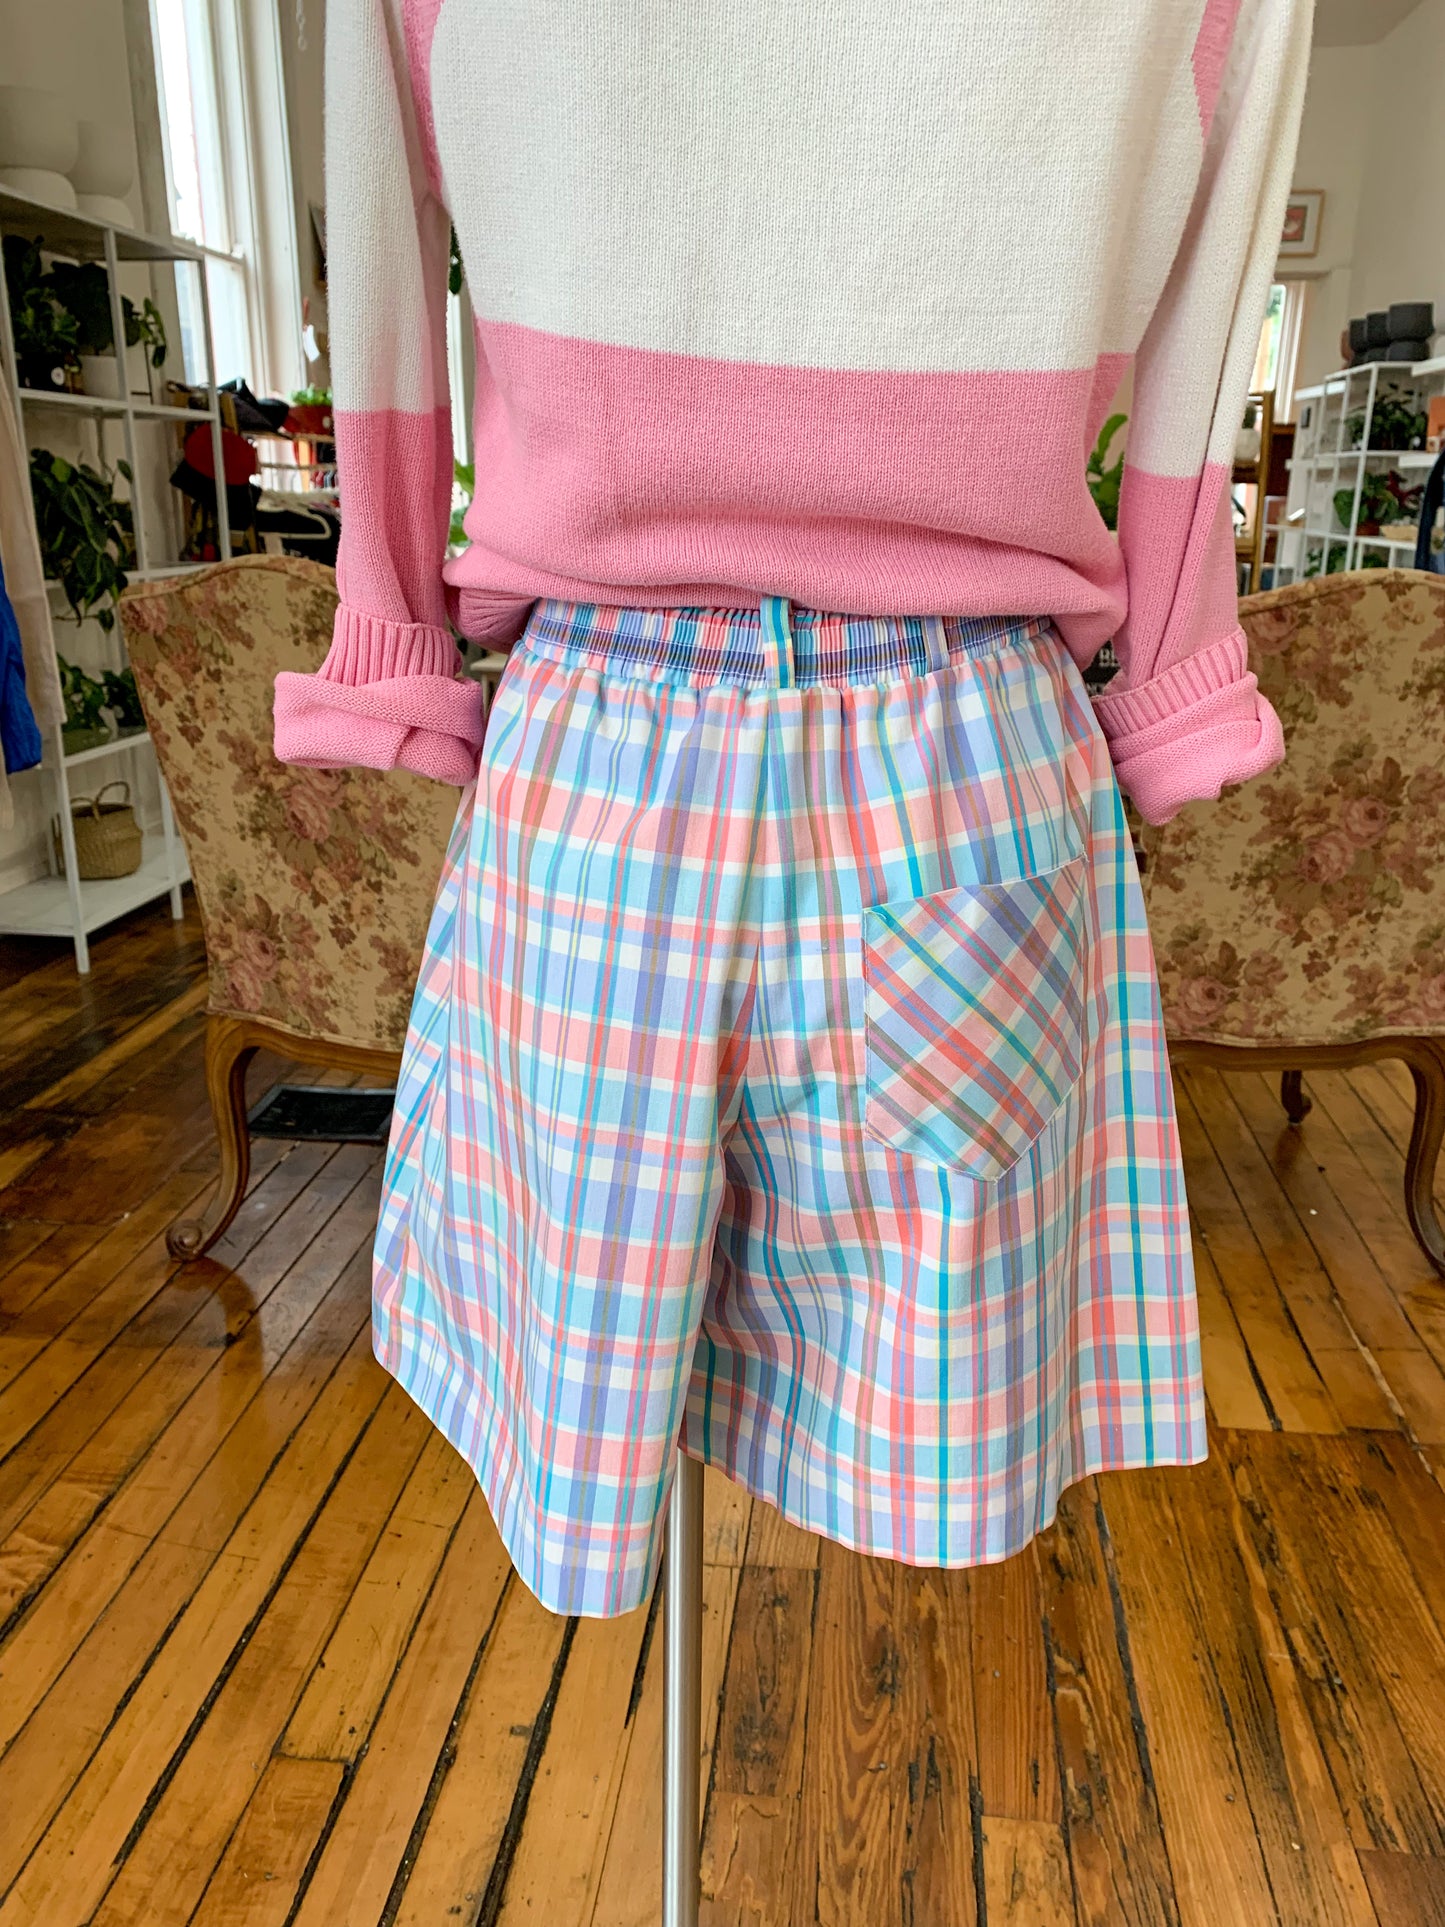 Pleated pastel shorts